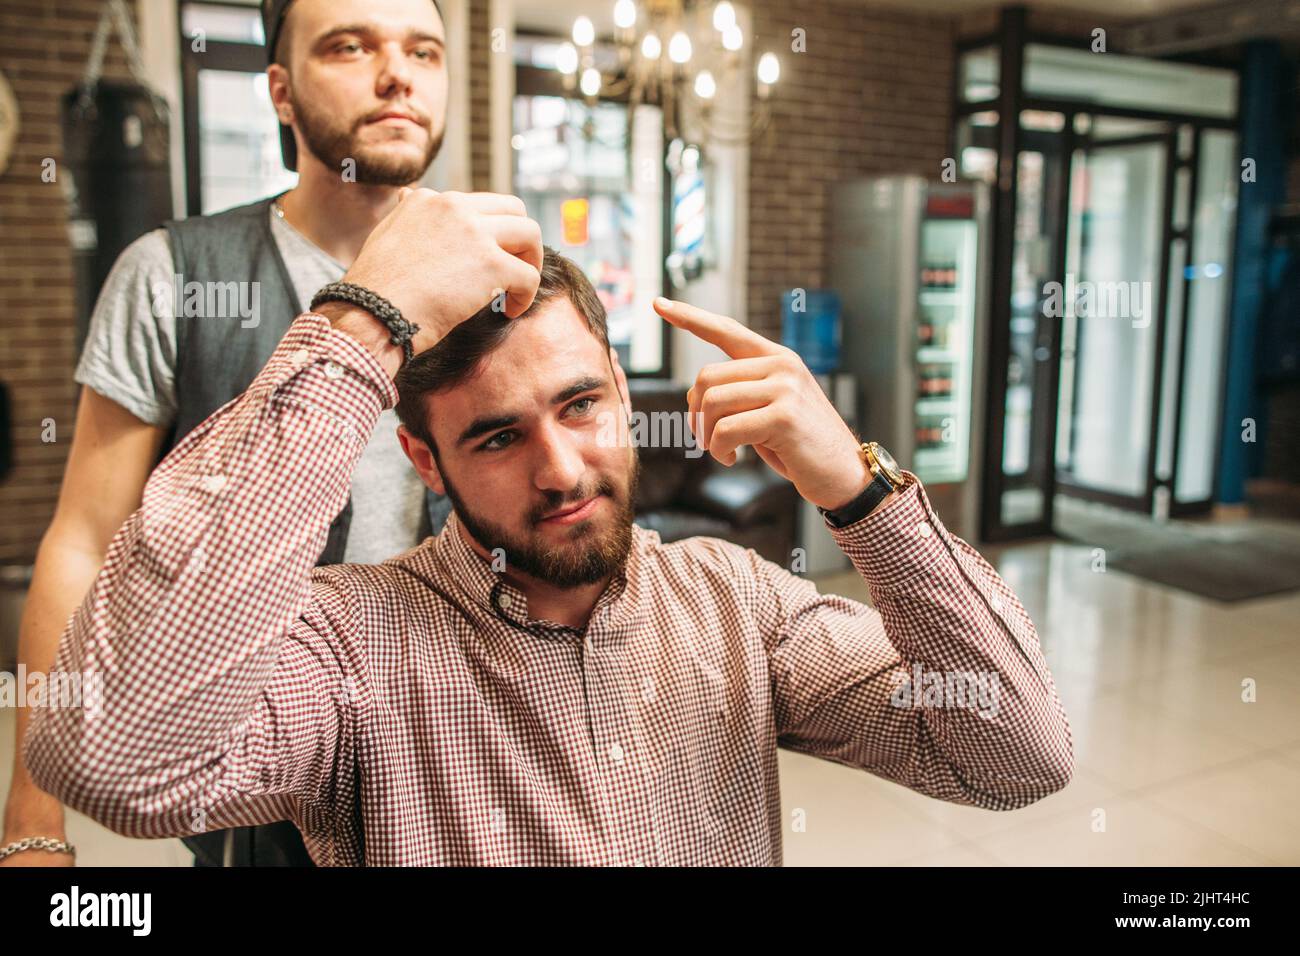 The Best Barber Shop Near Me - Confident Man